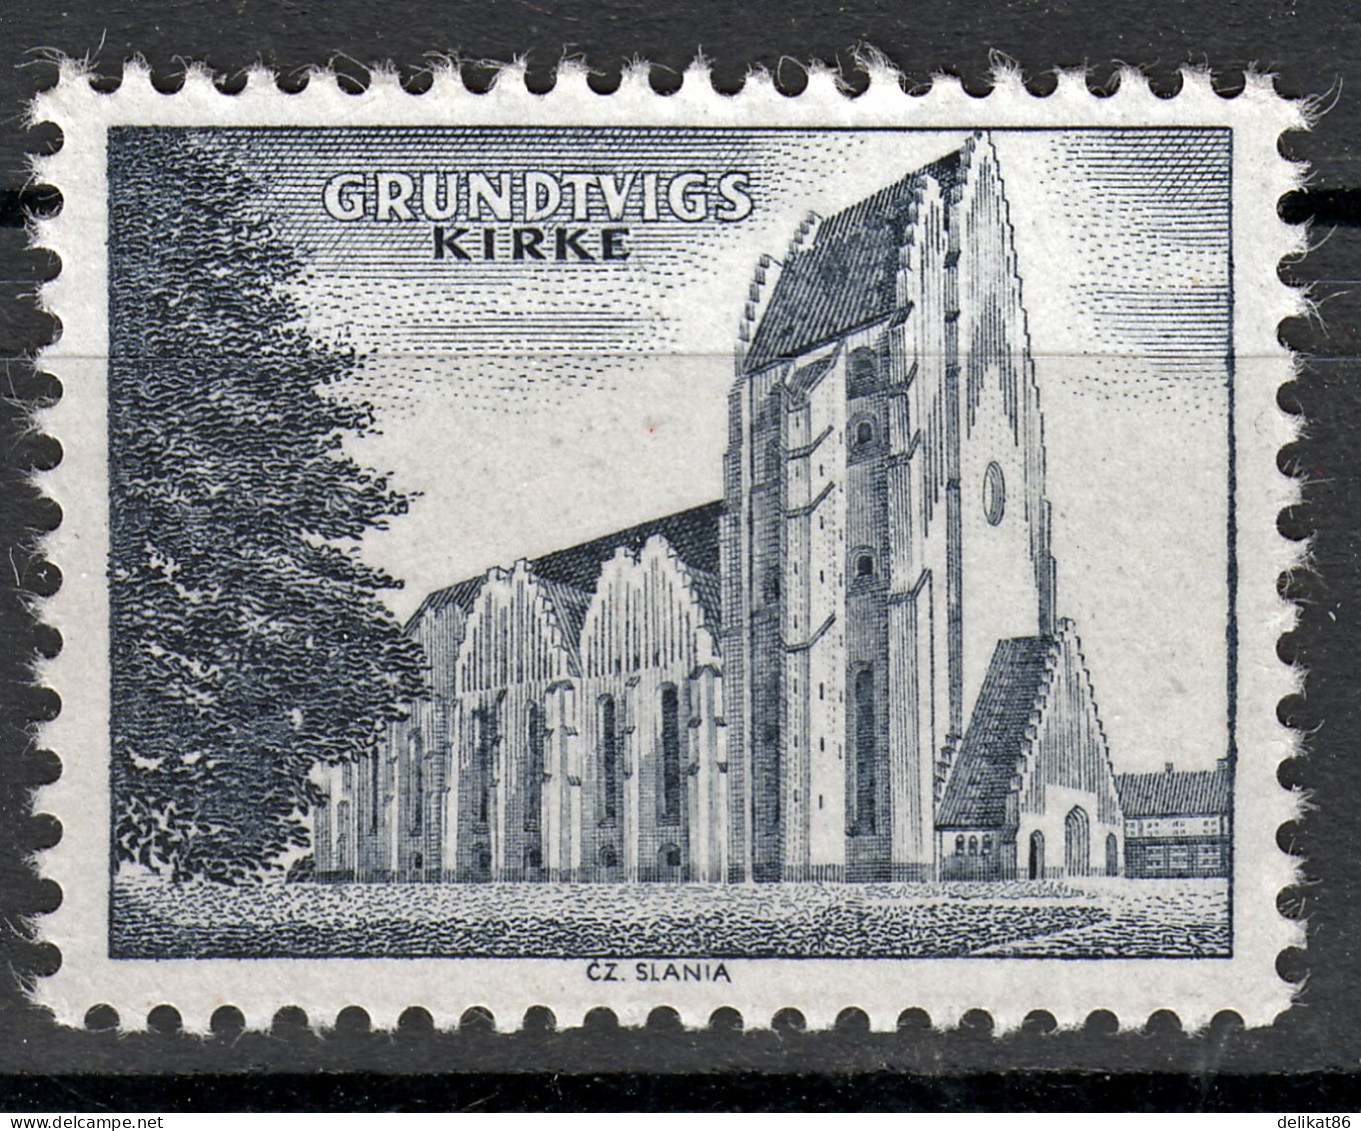 Probedruck Test Stamp Specimen Prøve Grundtvig Kirke Slania 1968 - Proeven & Herdrukken